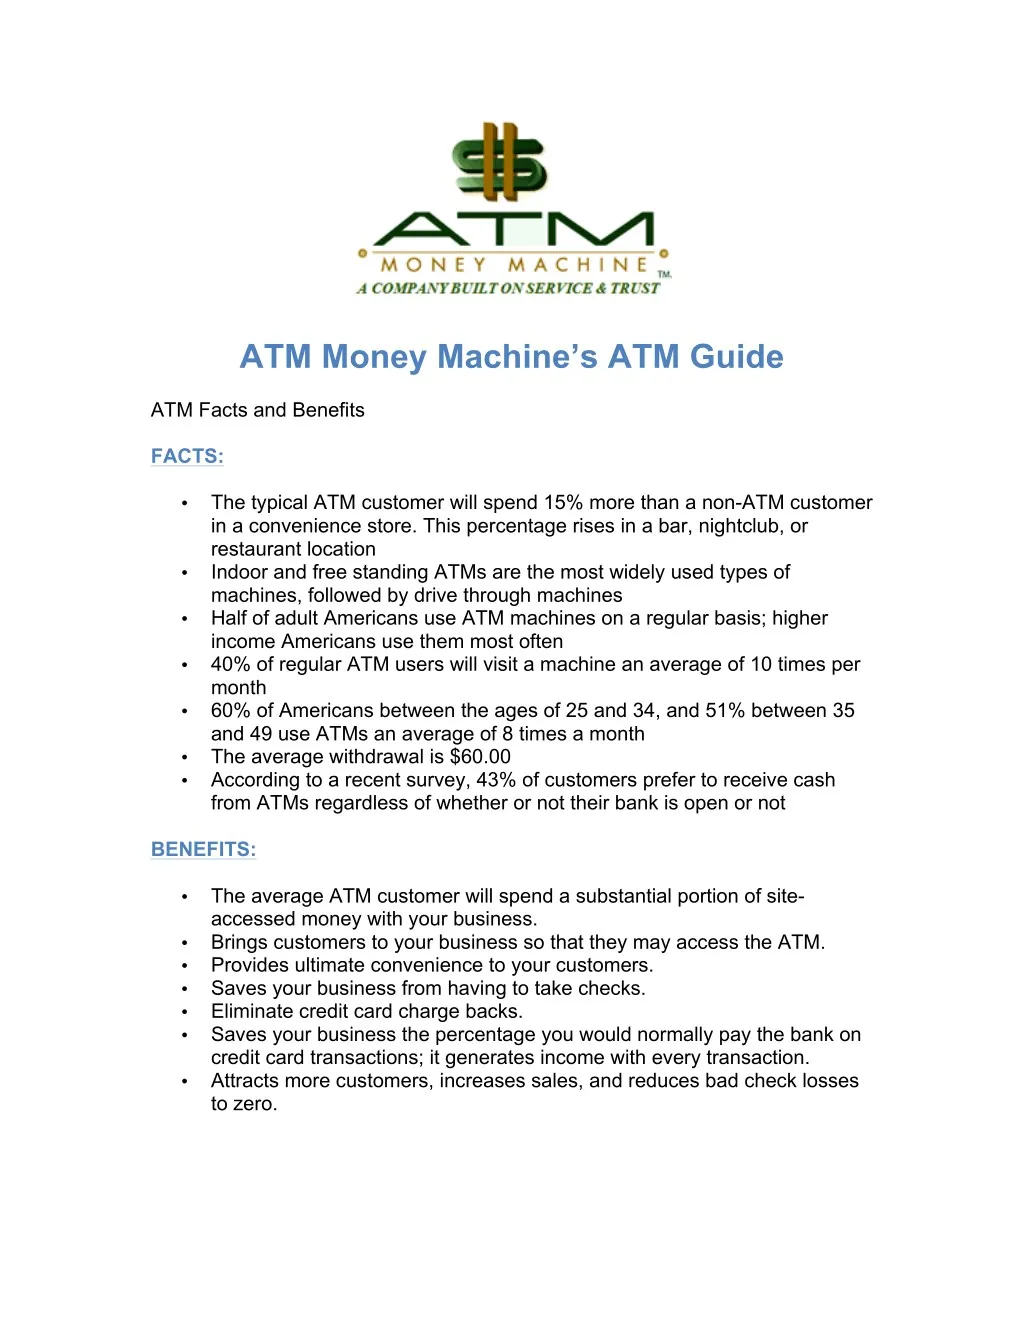 atm money machine s atm guide